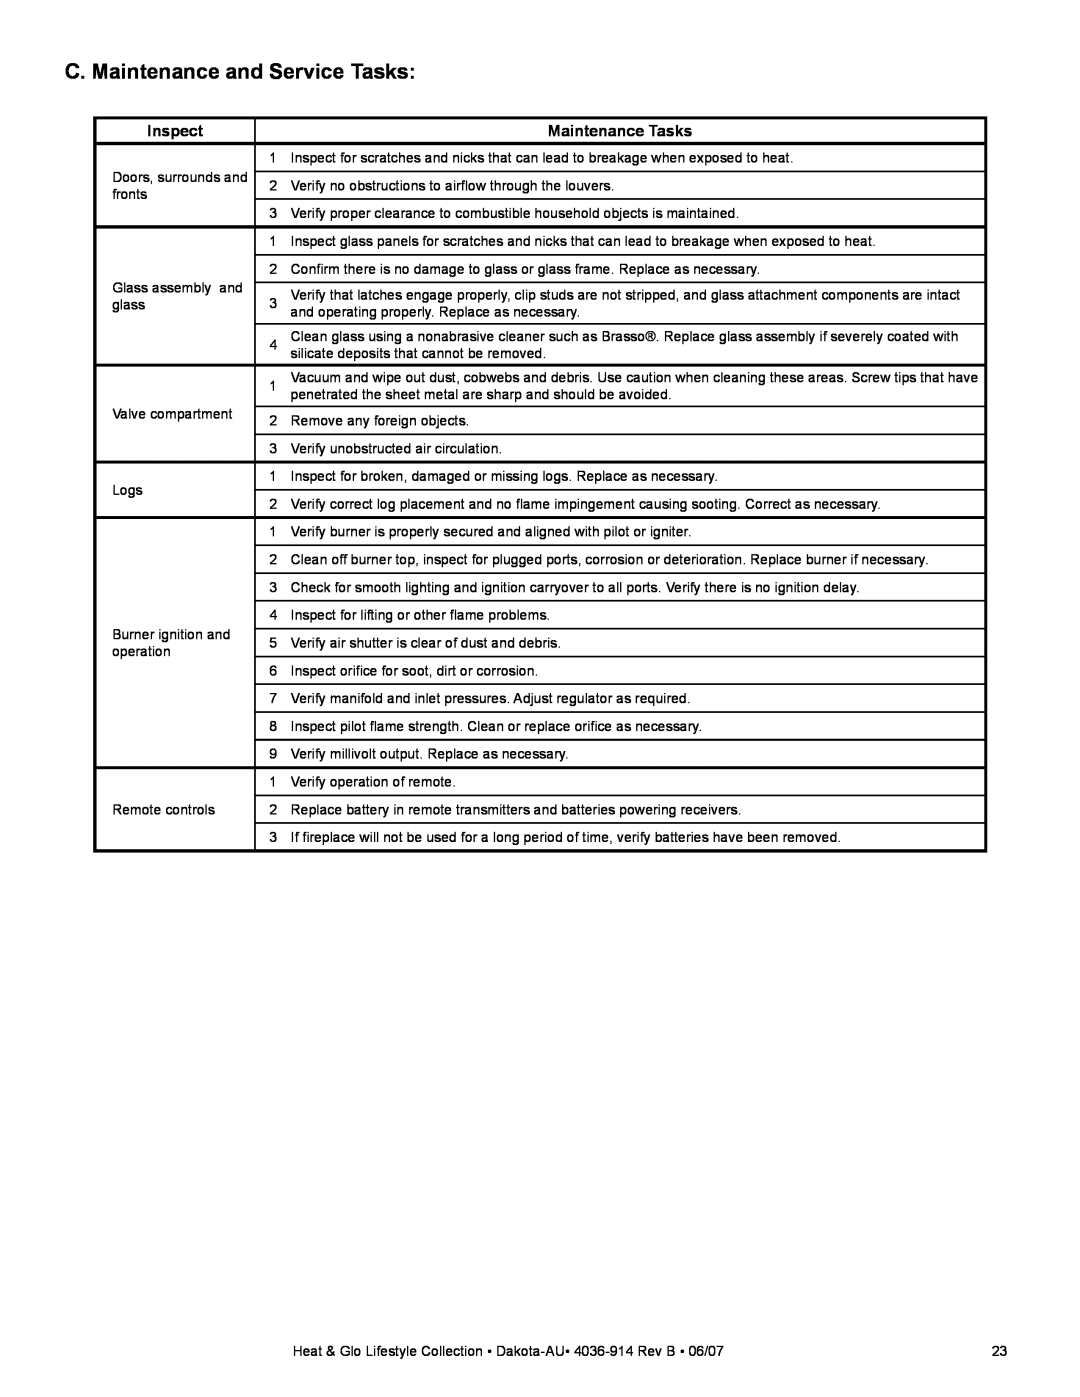 Heat & Glo LifeStyle DAKOTA-AU manual C. Maintenance and Service Tasks, Inspect, Maintenance Tasks 